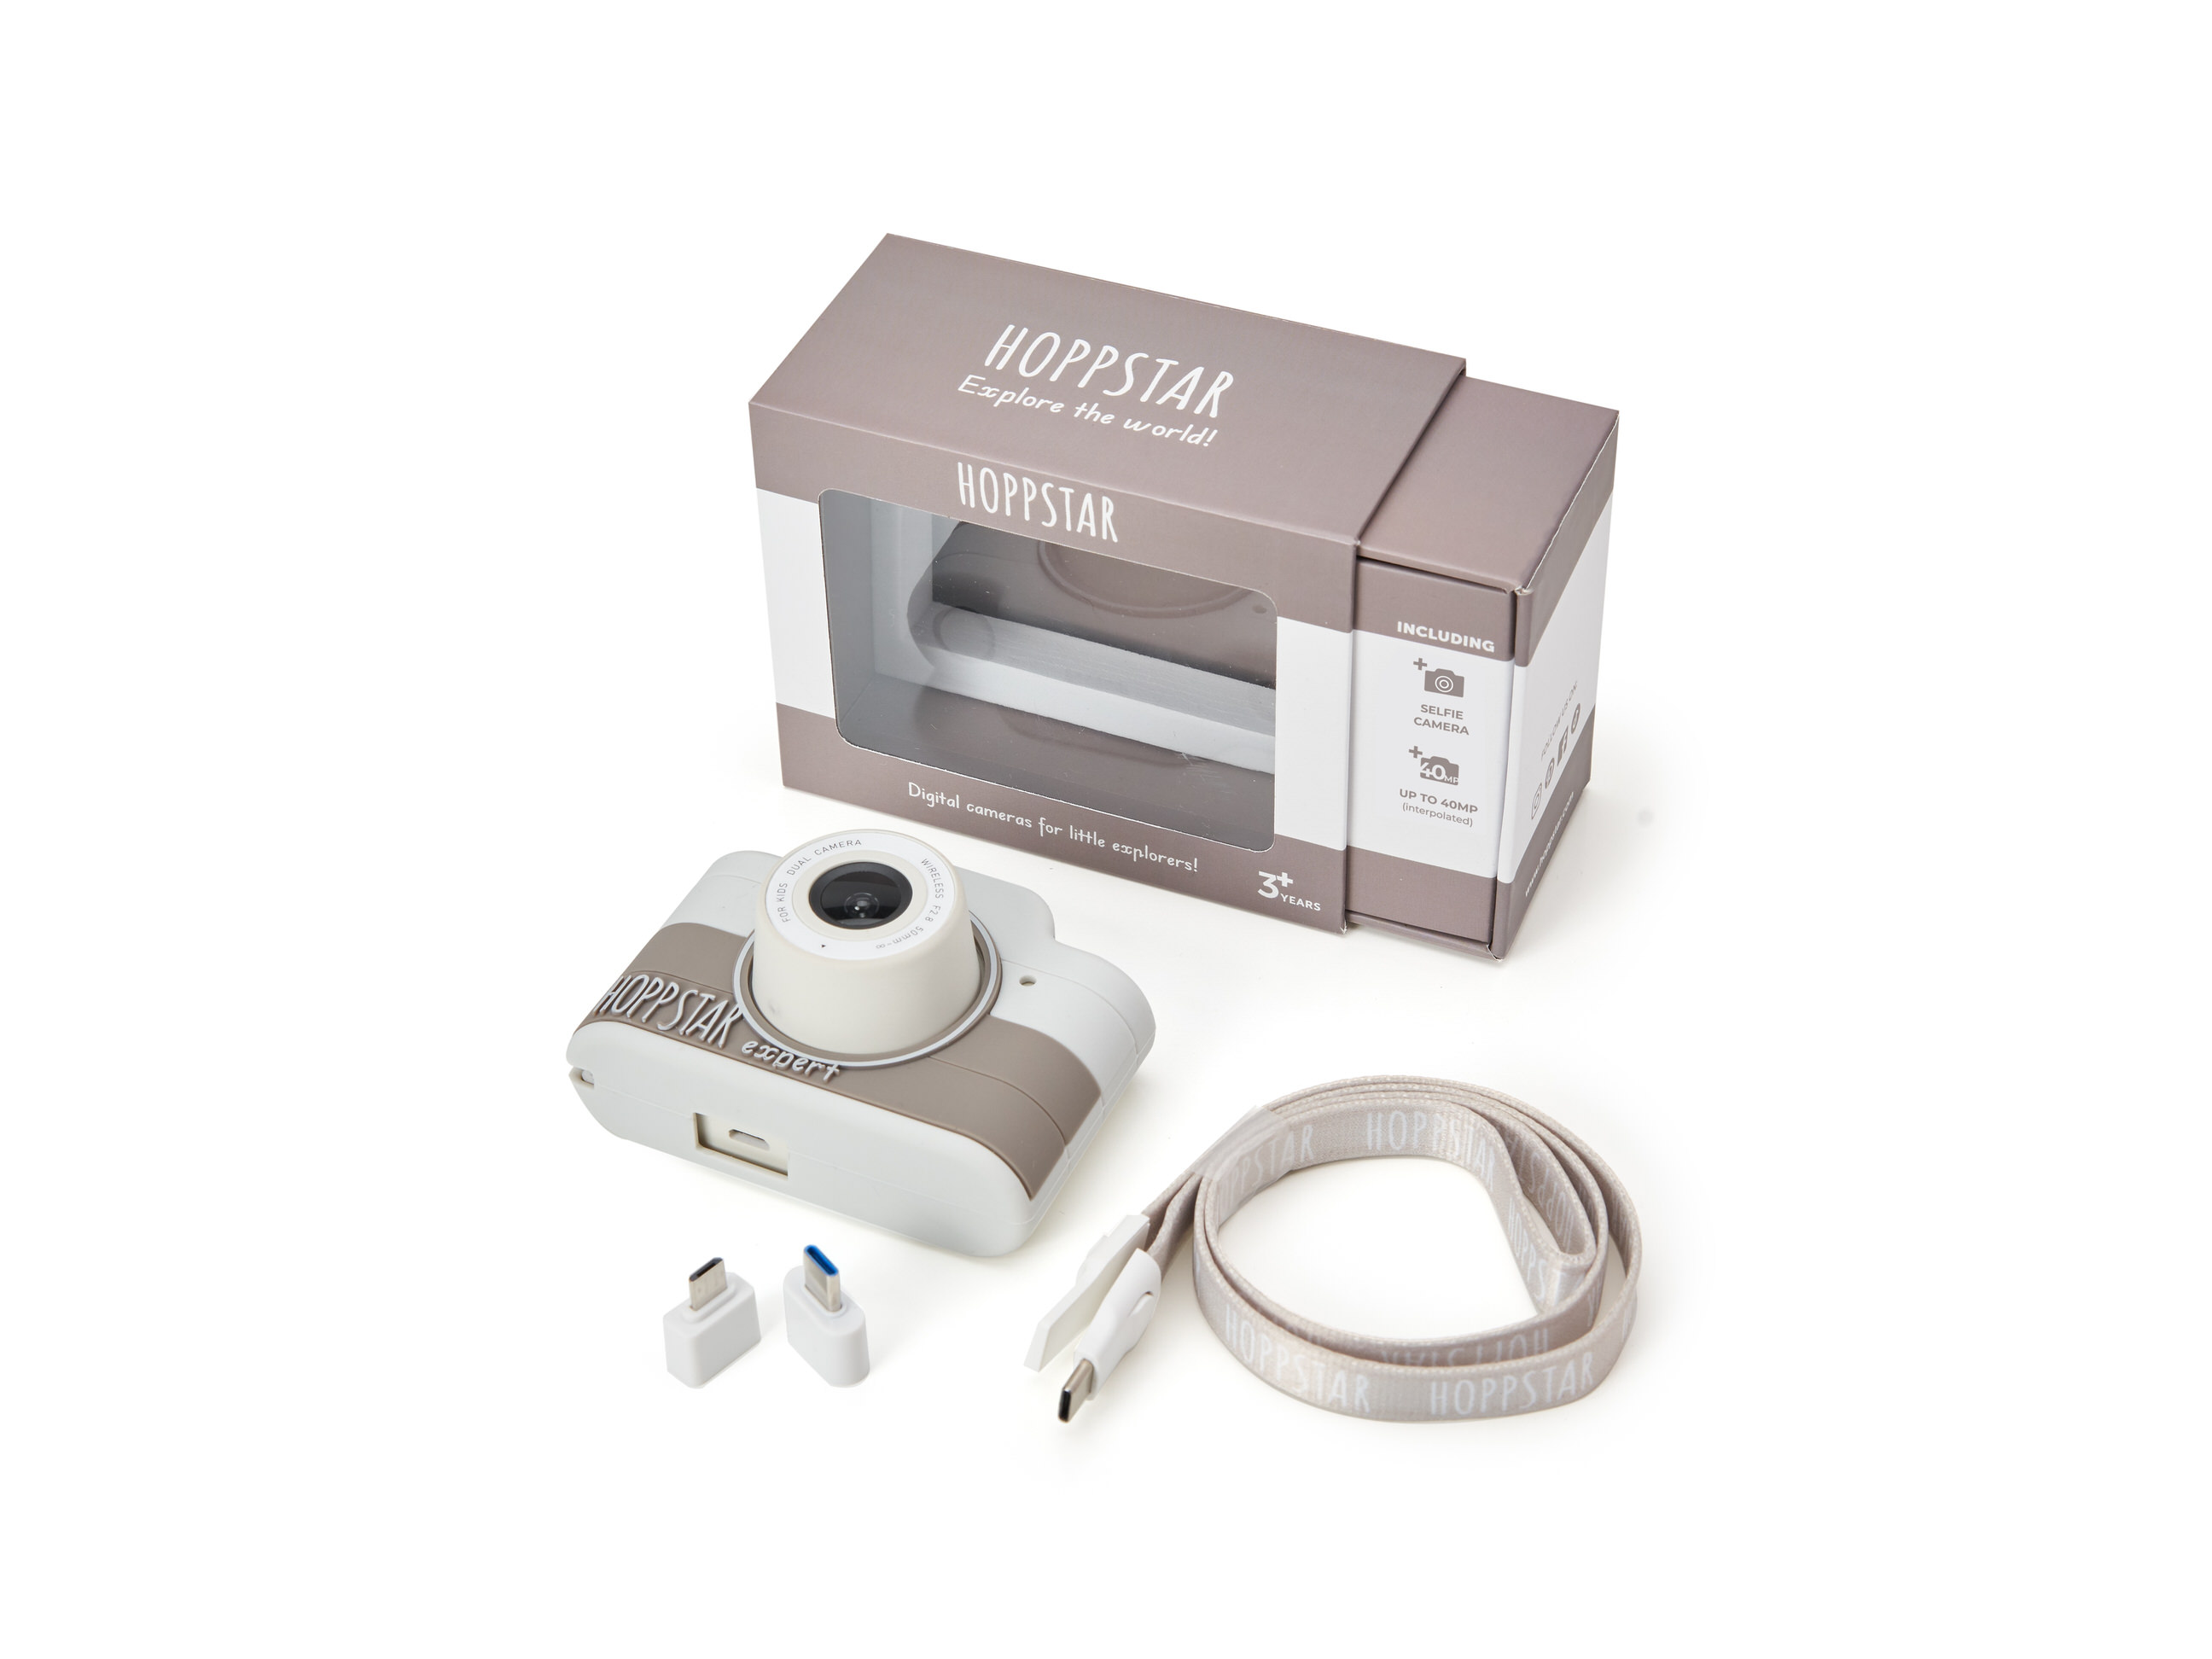 Hoppstar Expert Kamera mit Siena (braun/weiß) Silikonhülle, kompletter  Lieferumfang